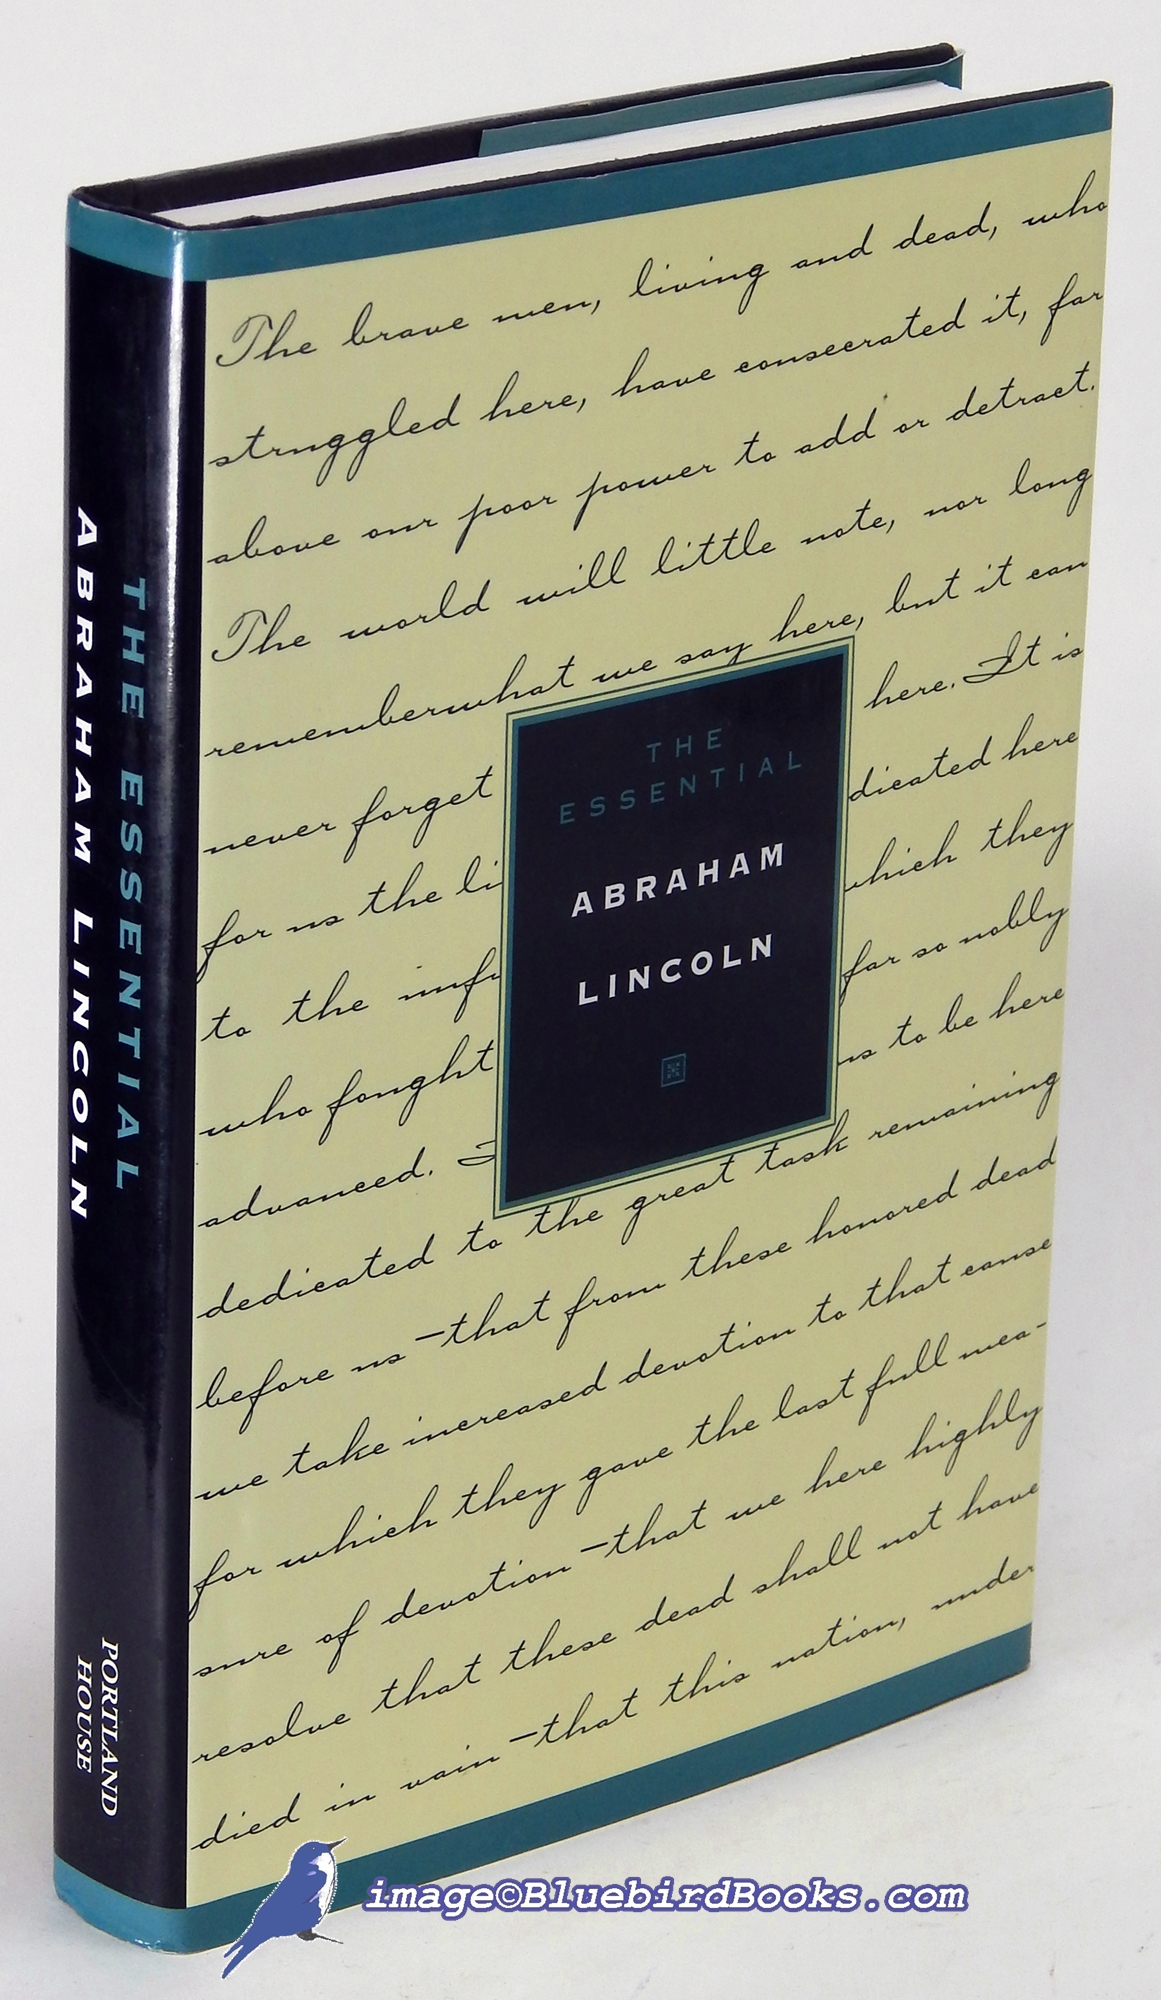 HUNT, JOHN GABRIEL (EDITOR) - The Essential Abraham Lincoln